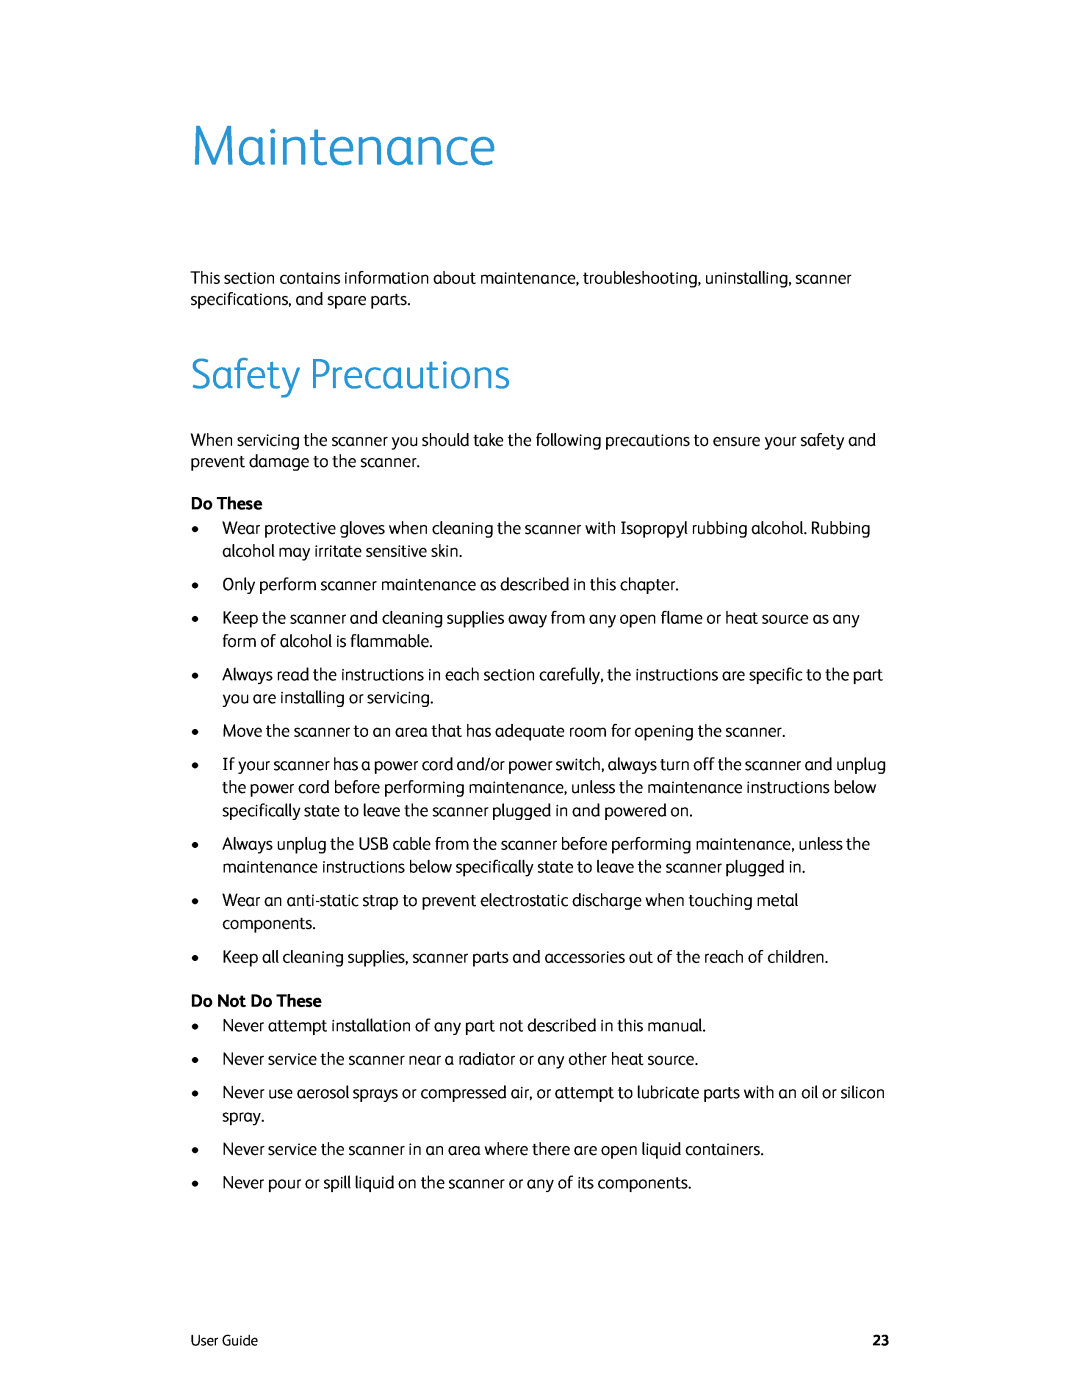 Xerox xerox manual Maintenance, Safety Precautions 